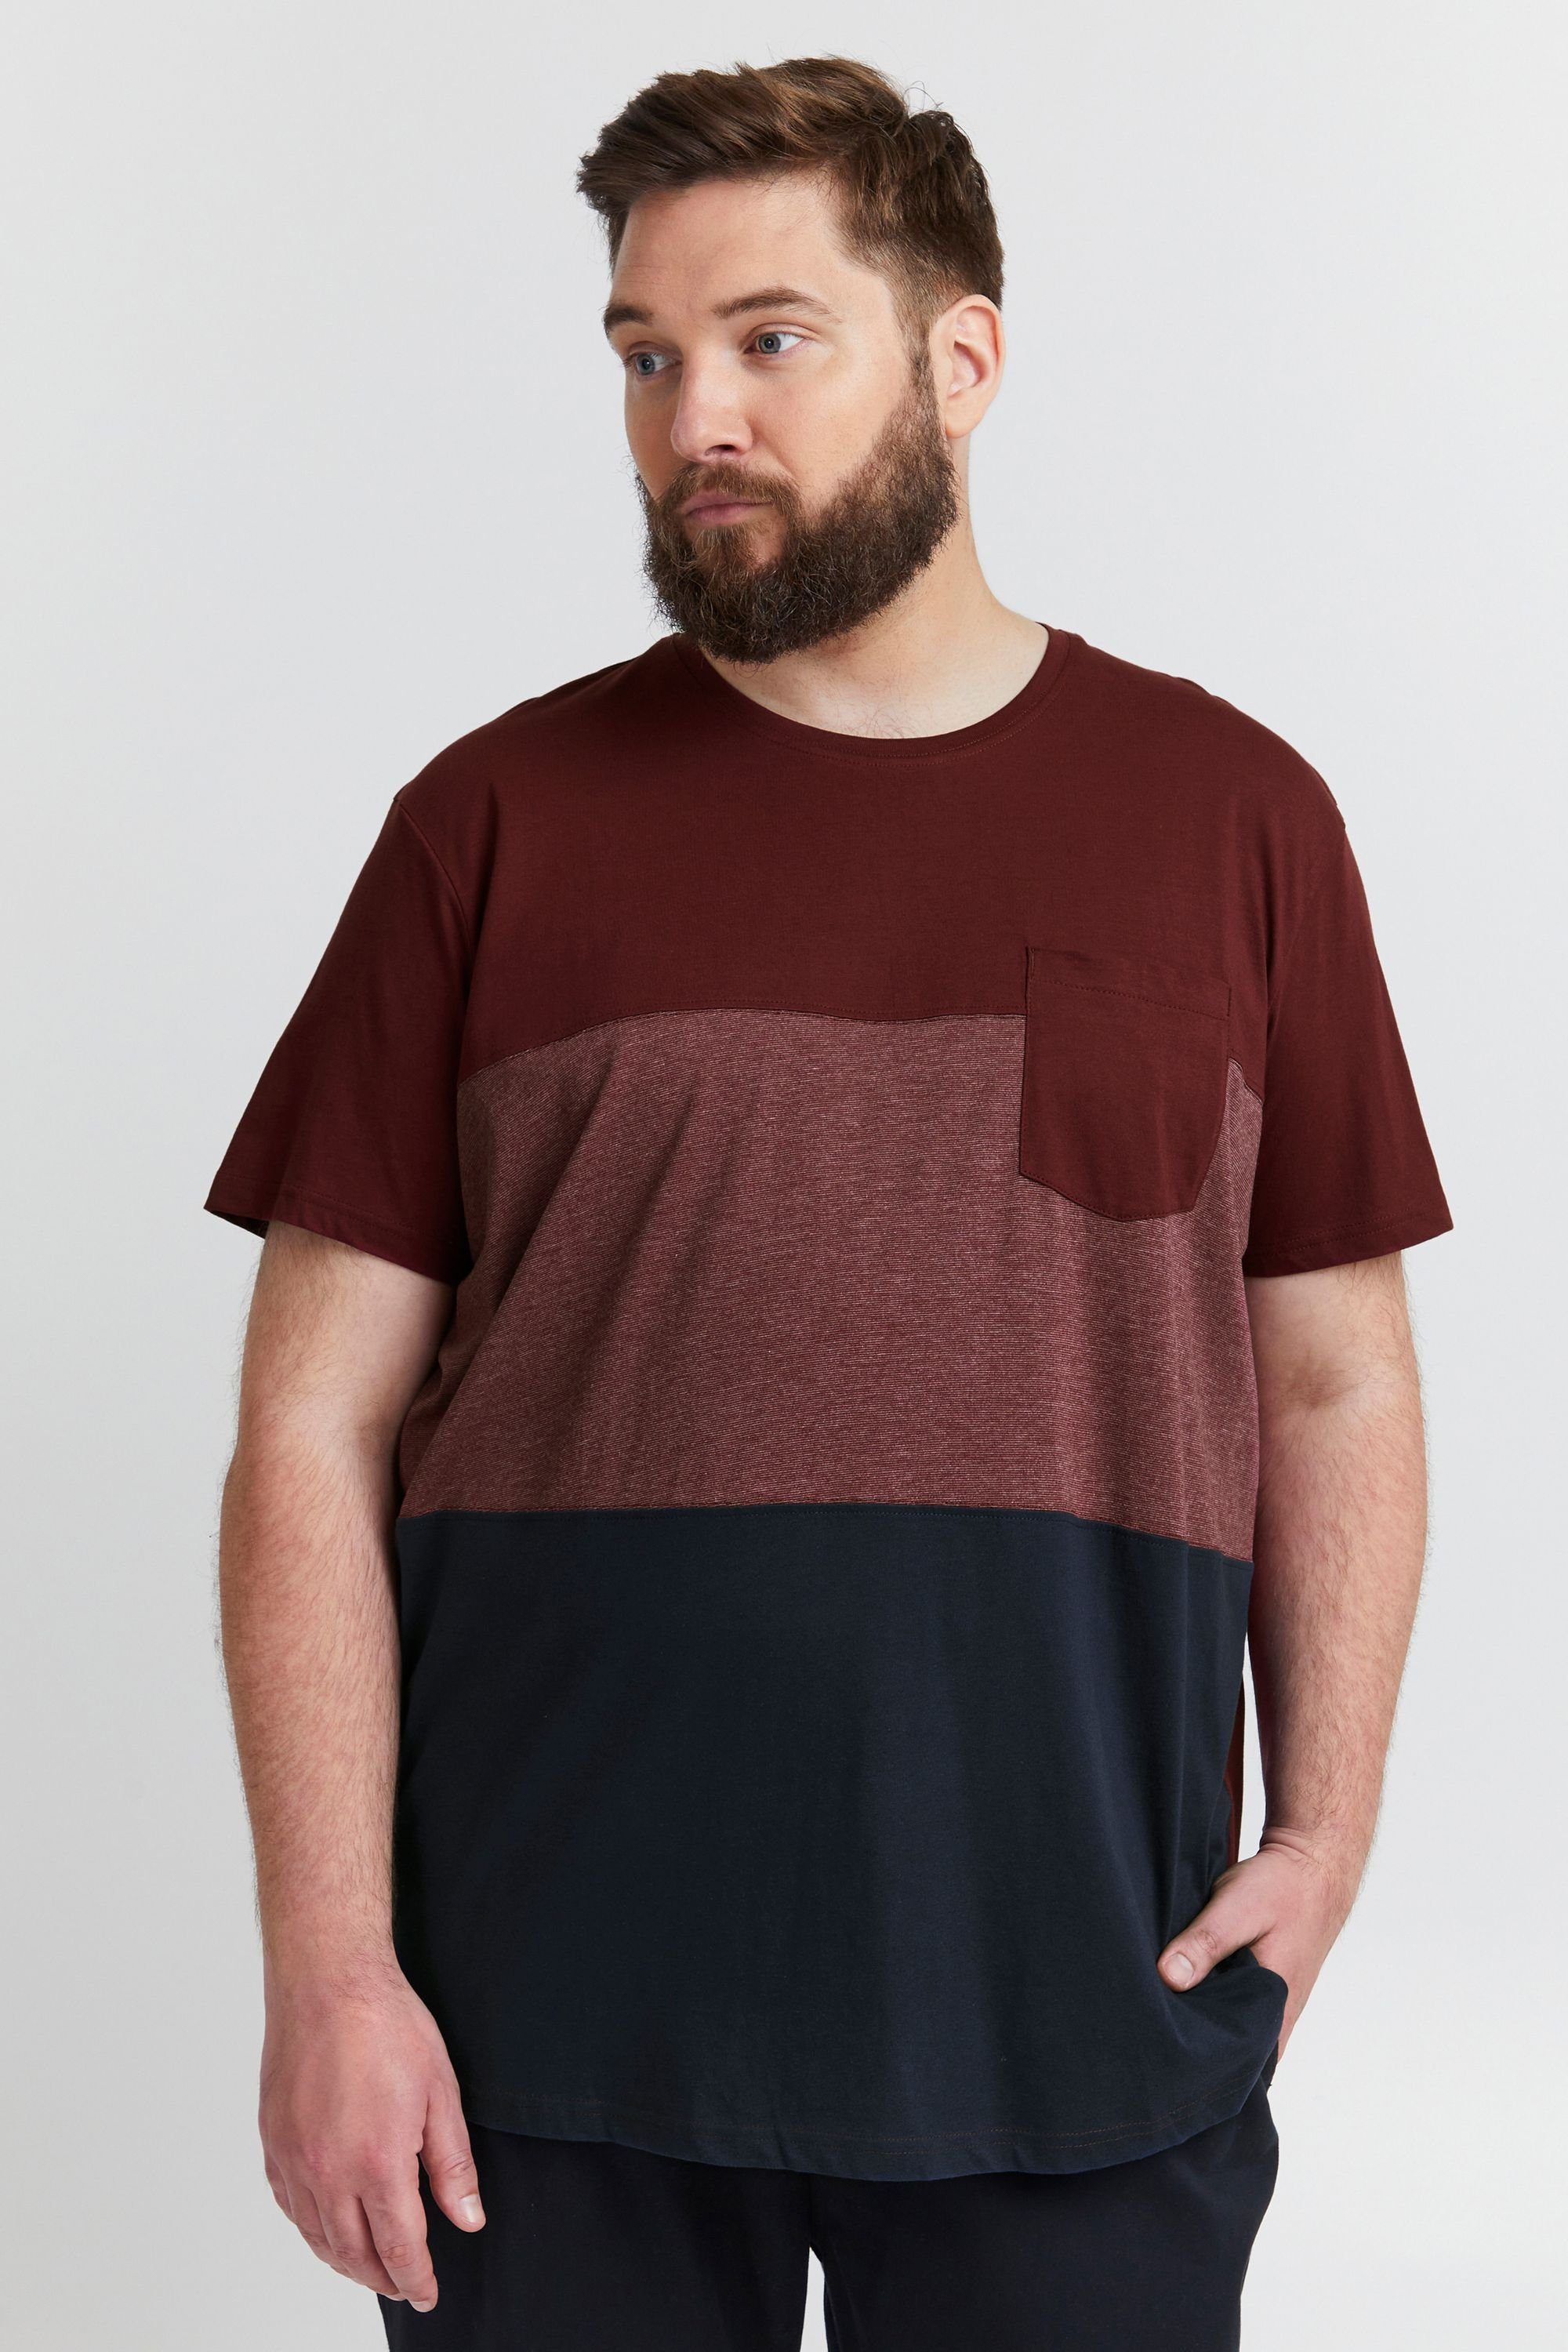 !Solid T-Shirt SDMingo BT WINE RED (790985)